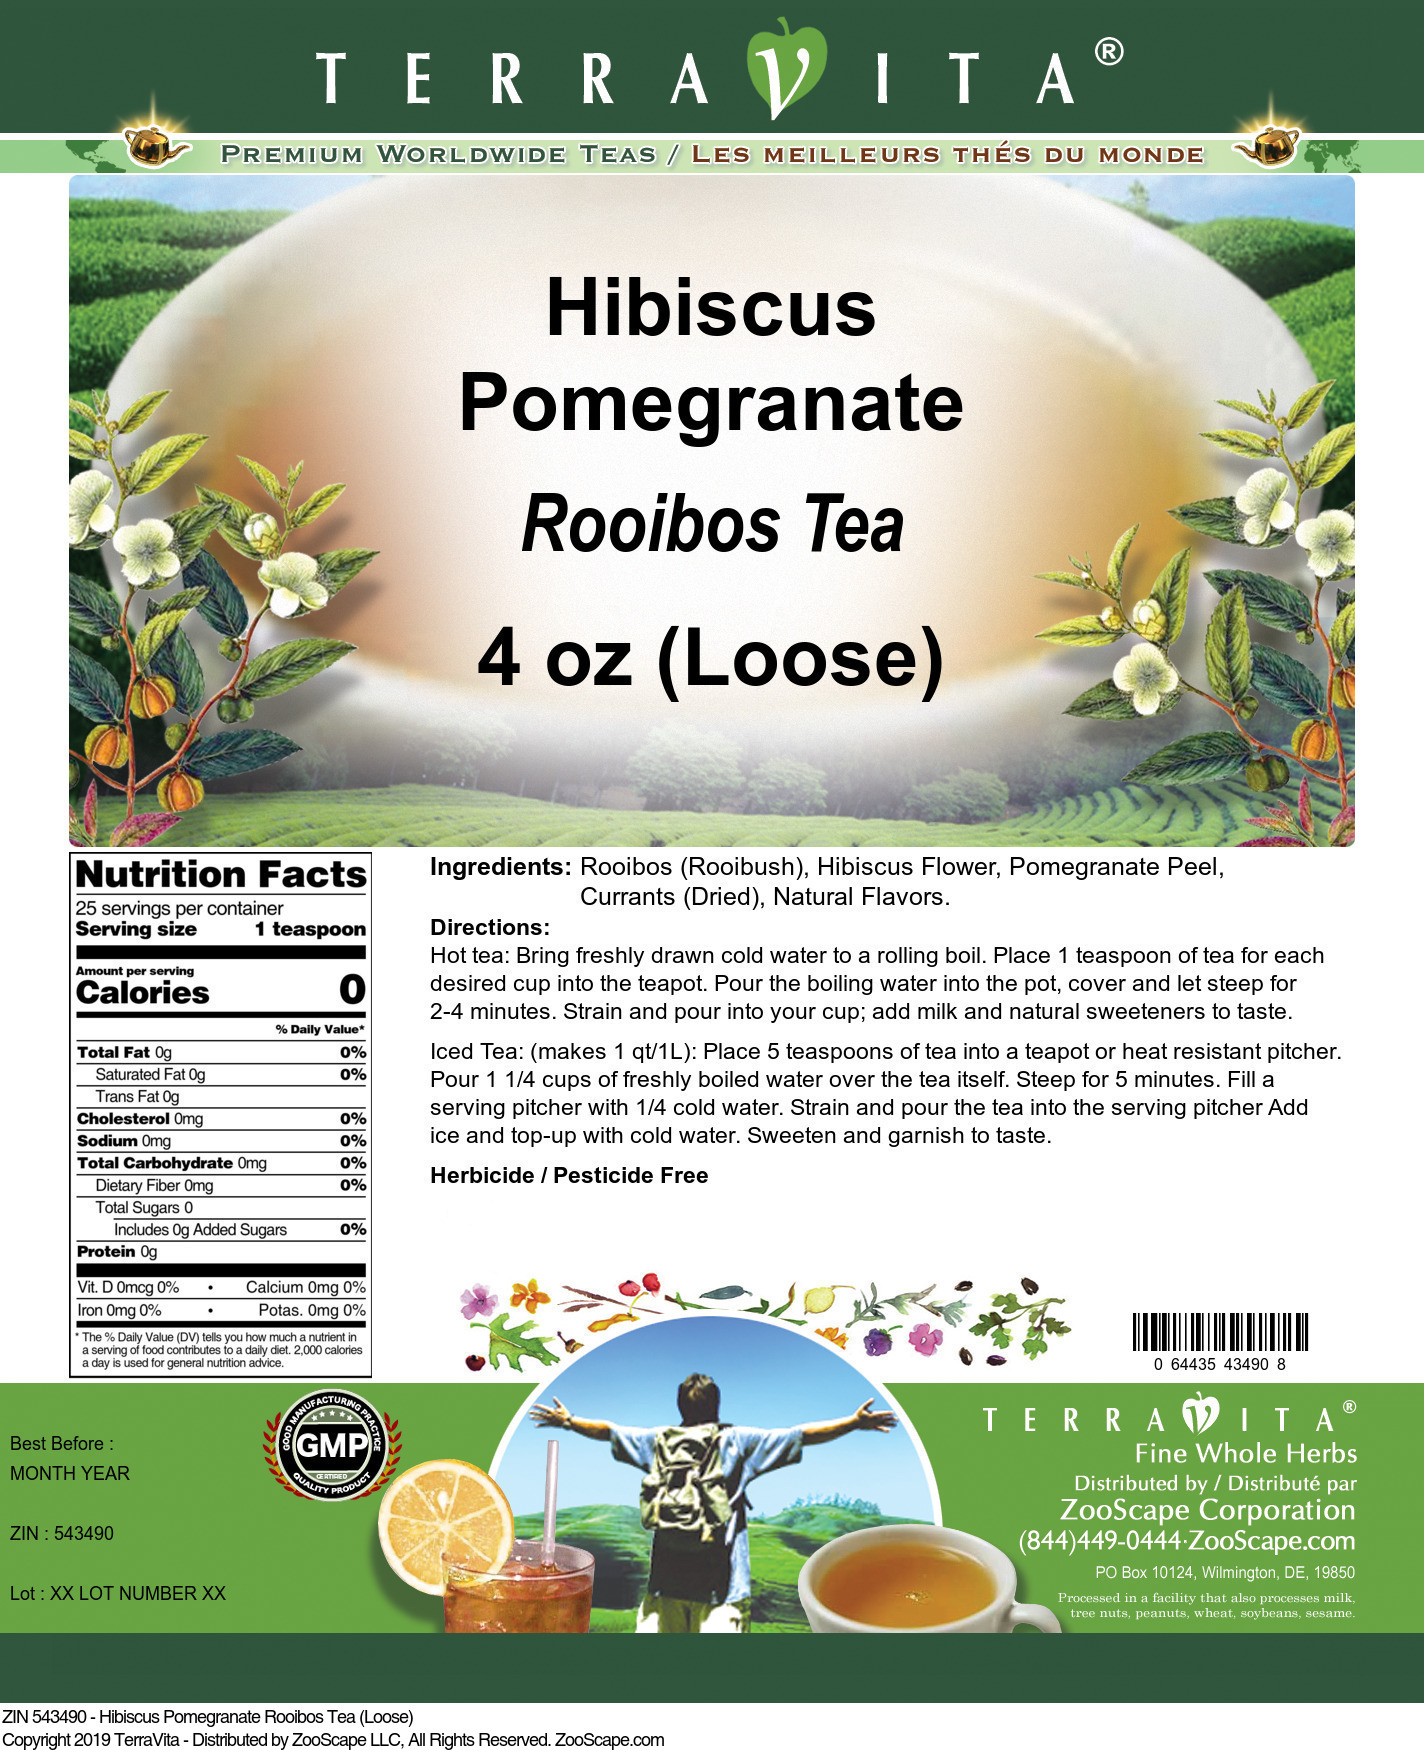 Hibiscus Pomegranate Rooibos Tea (Loose) - Label